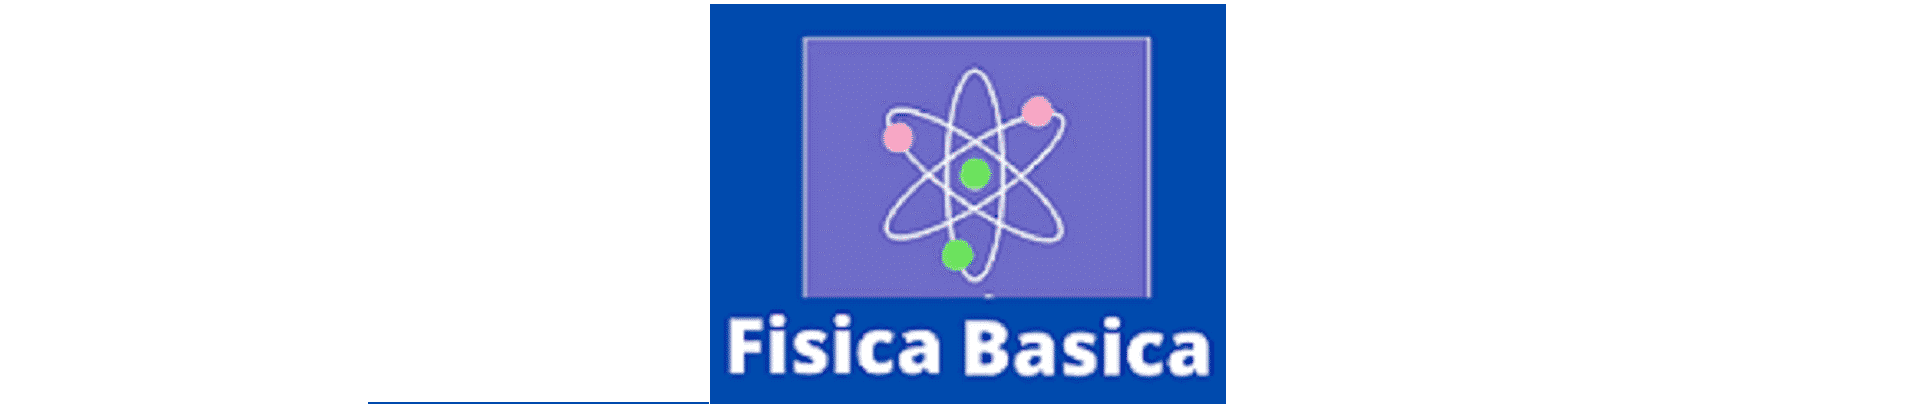 Fisica Basica